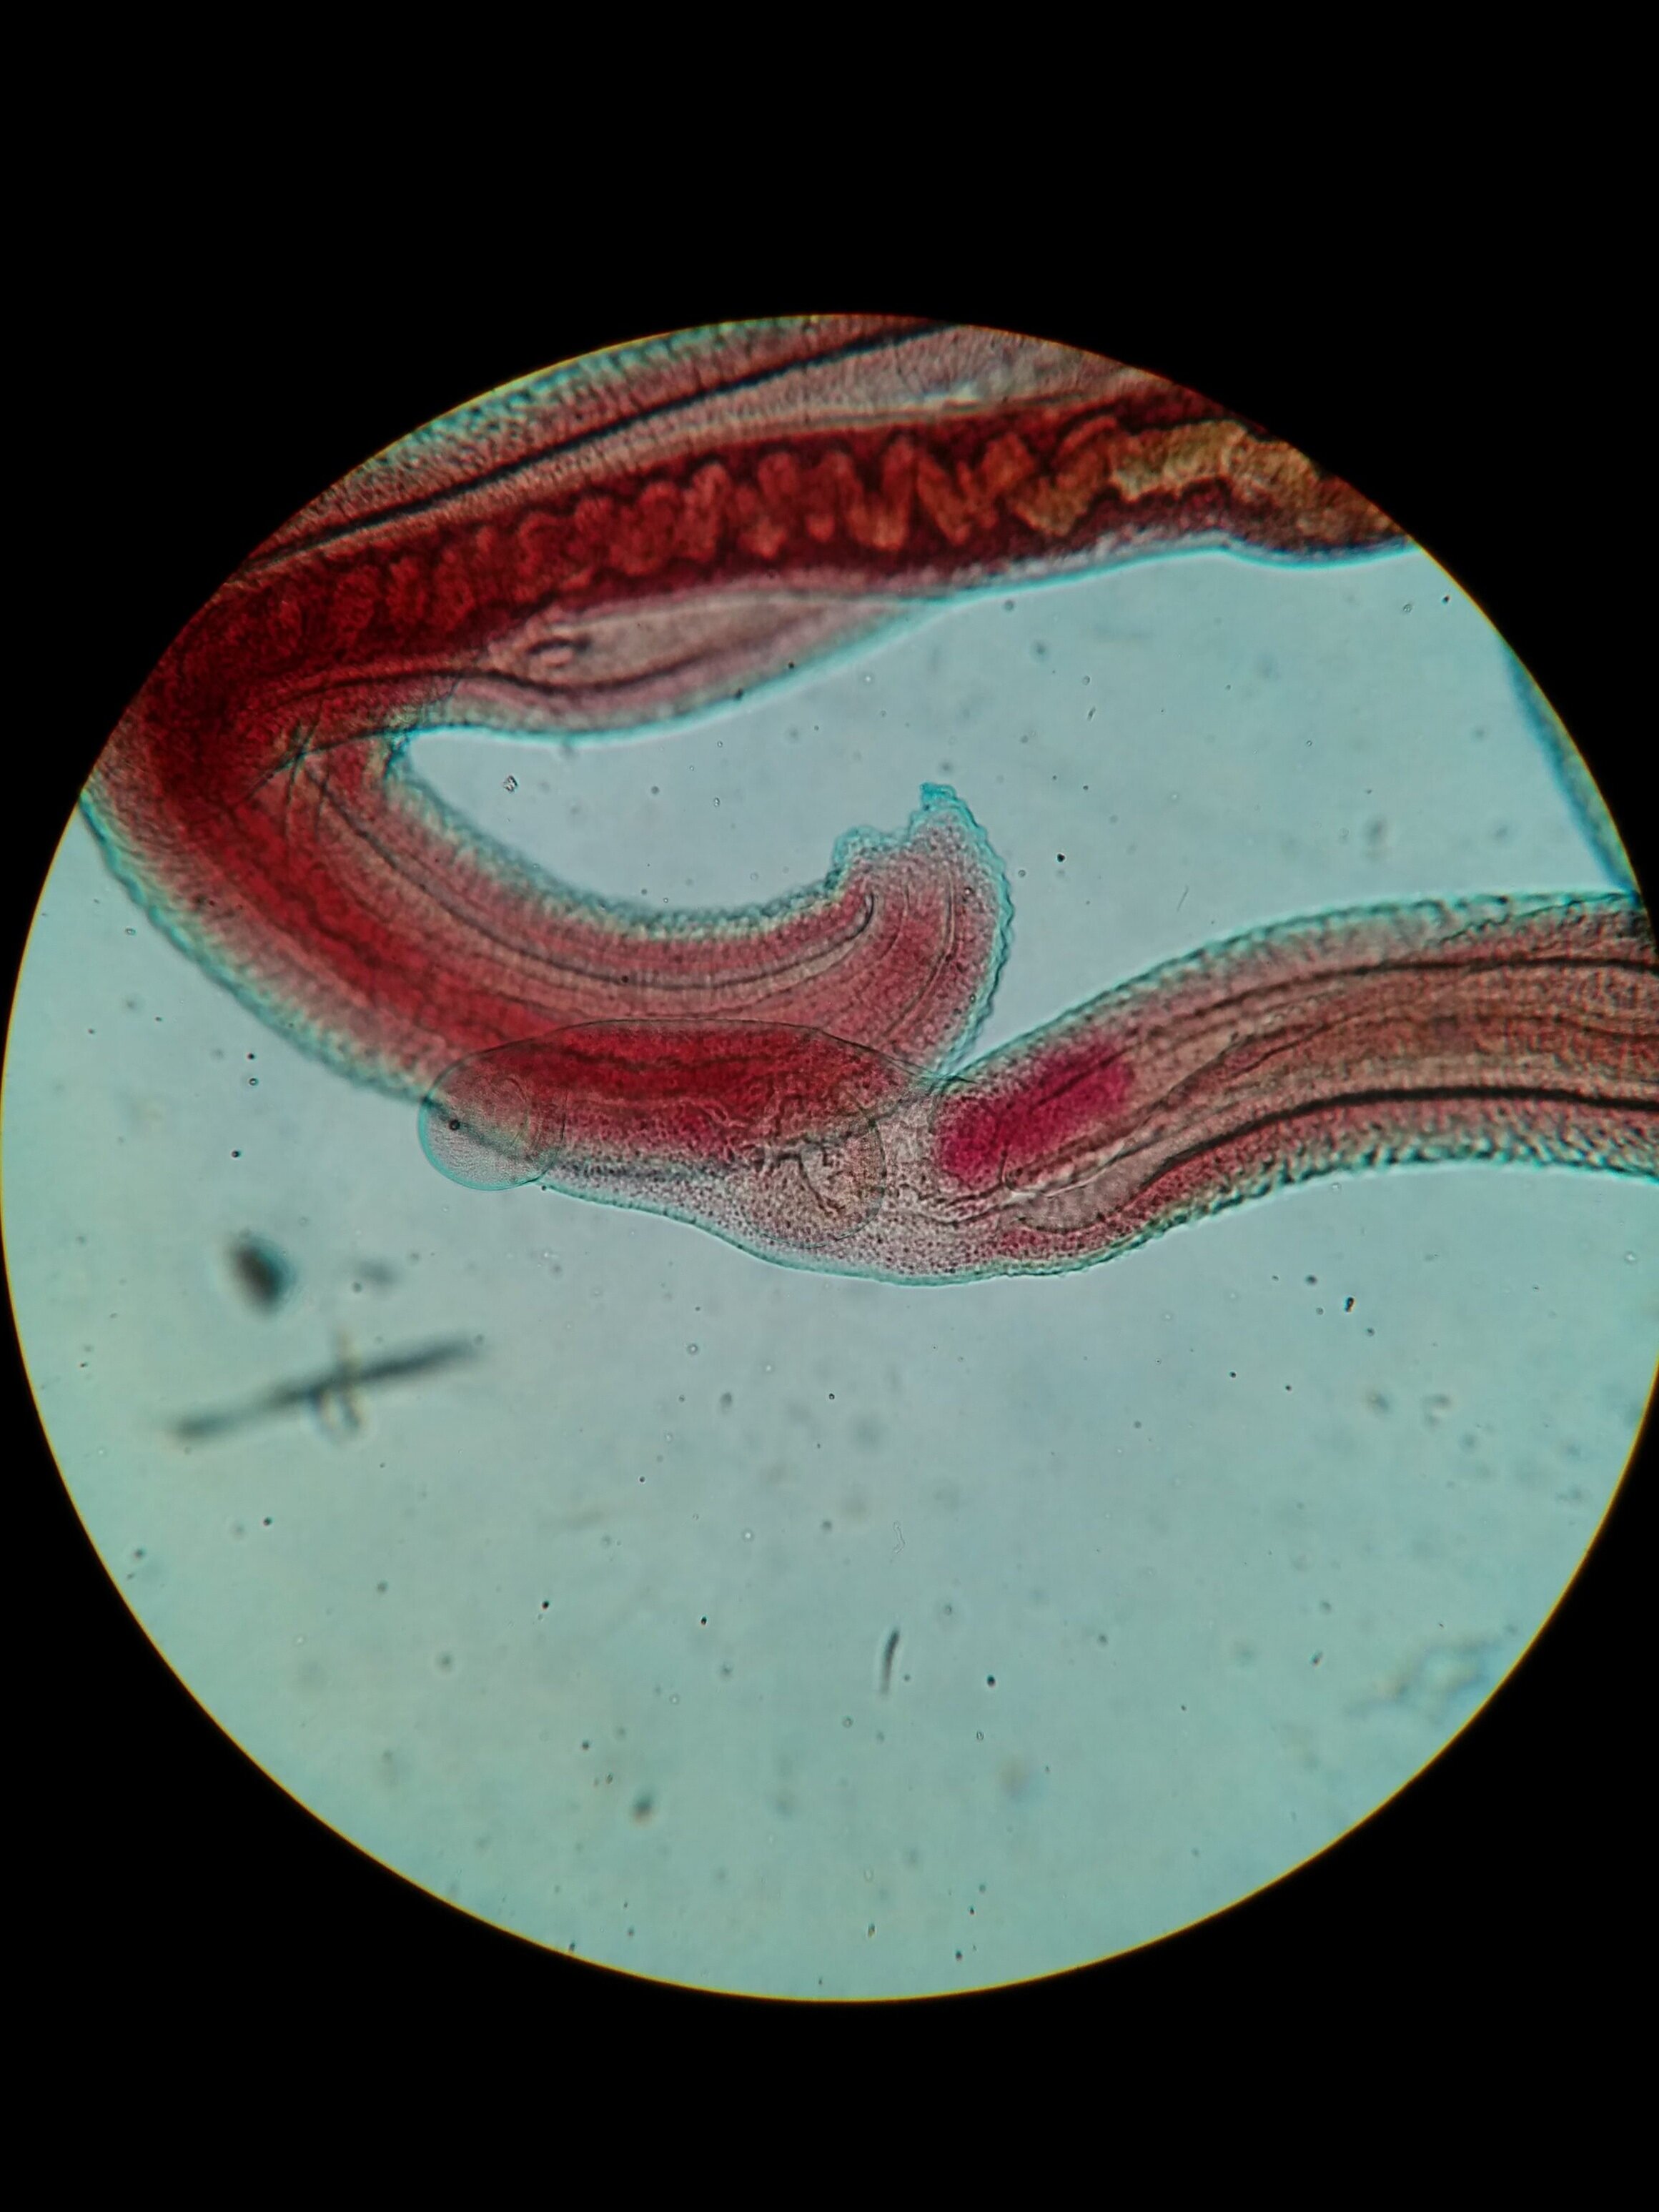   Schistosoma sp.   From purchased slide. 